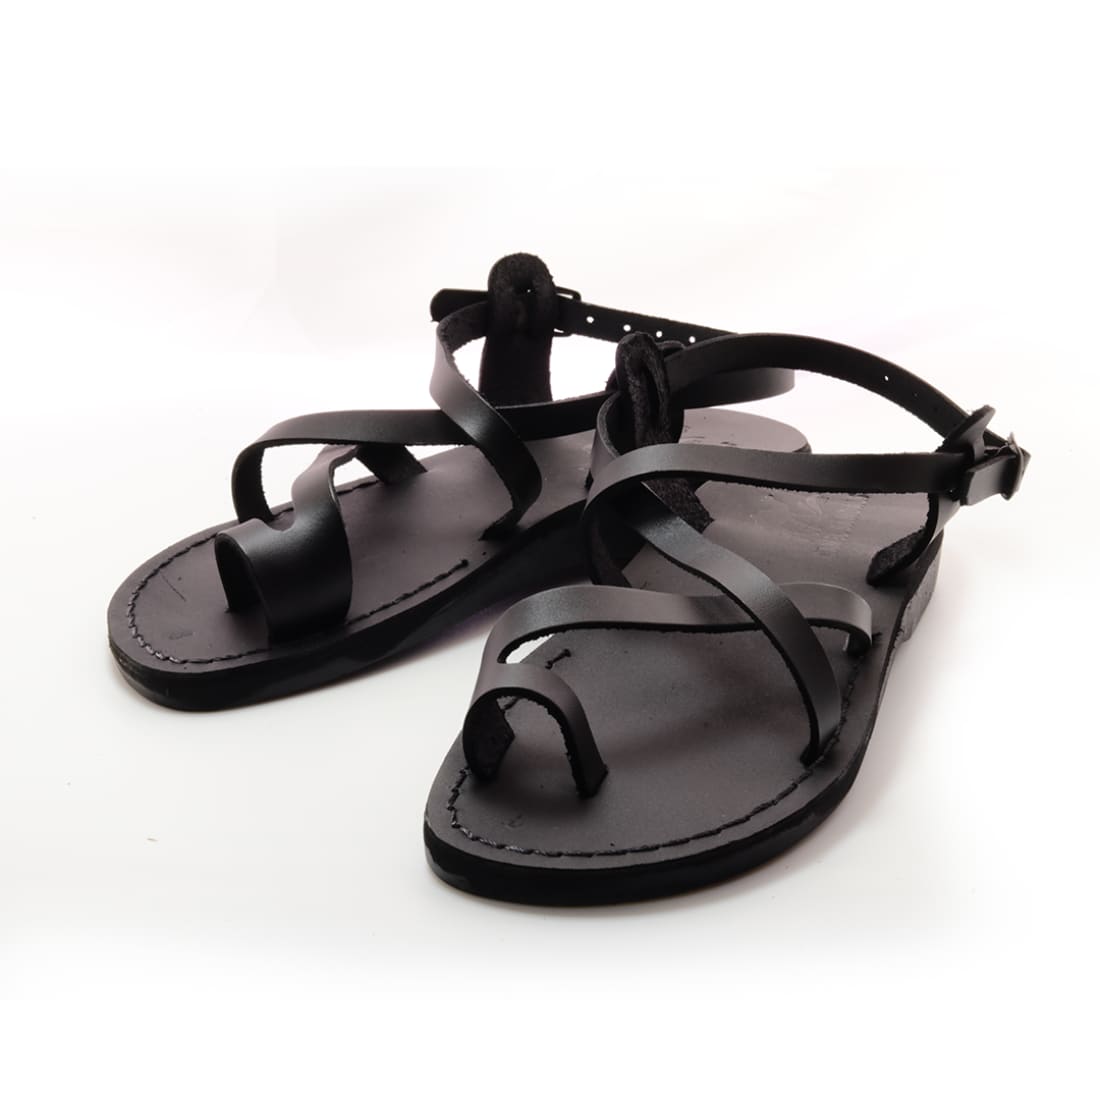 Samira - Tan leather Jesus sandal – Holysouq - Handmade Leather Creations